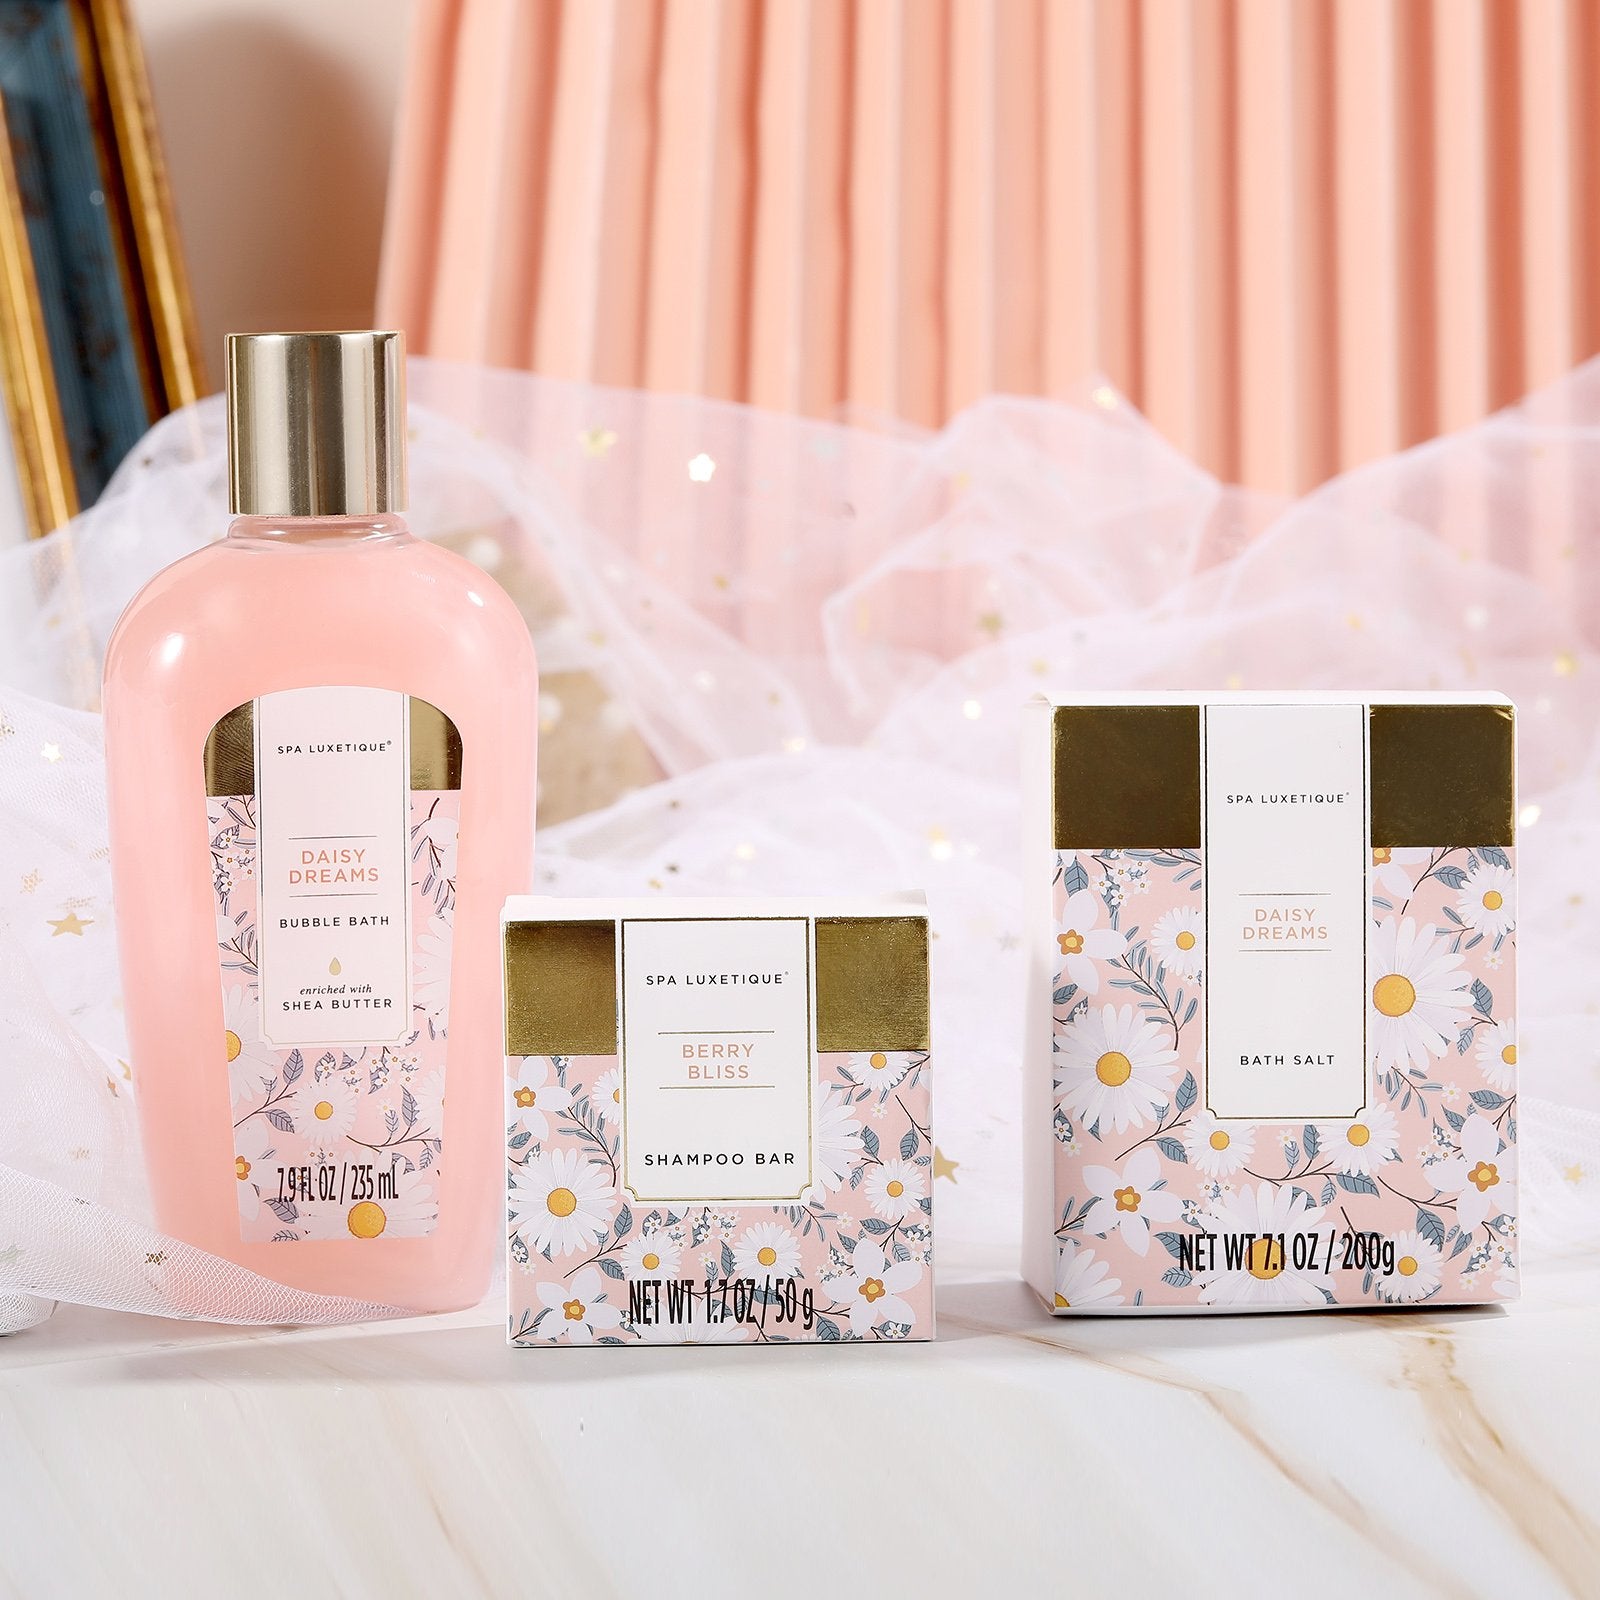 Spa Luxetique Gift Sets Daisy Dreams Fashion Bath Set Tote